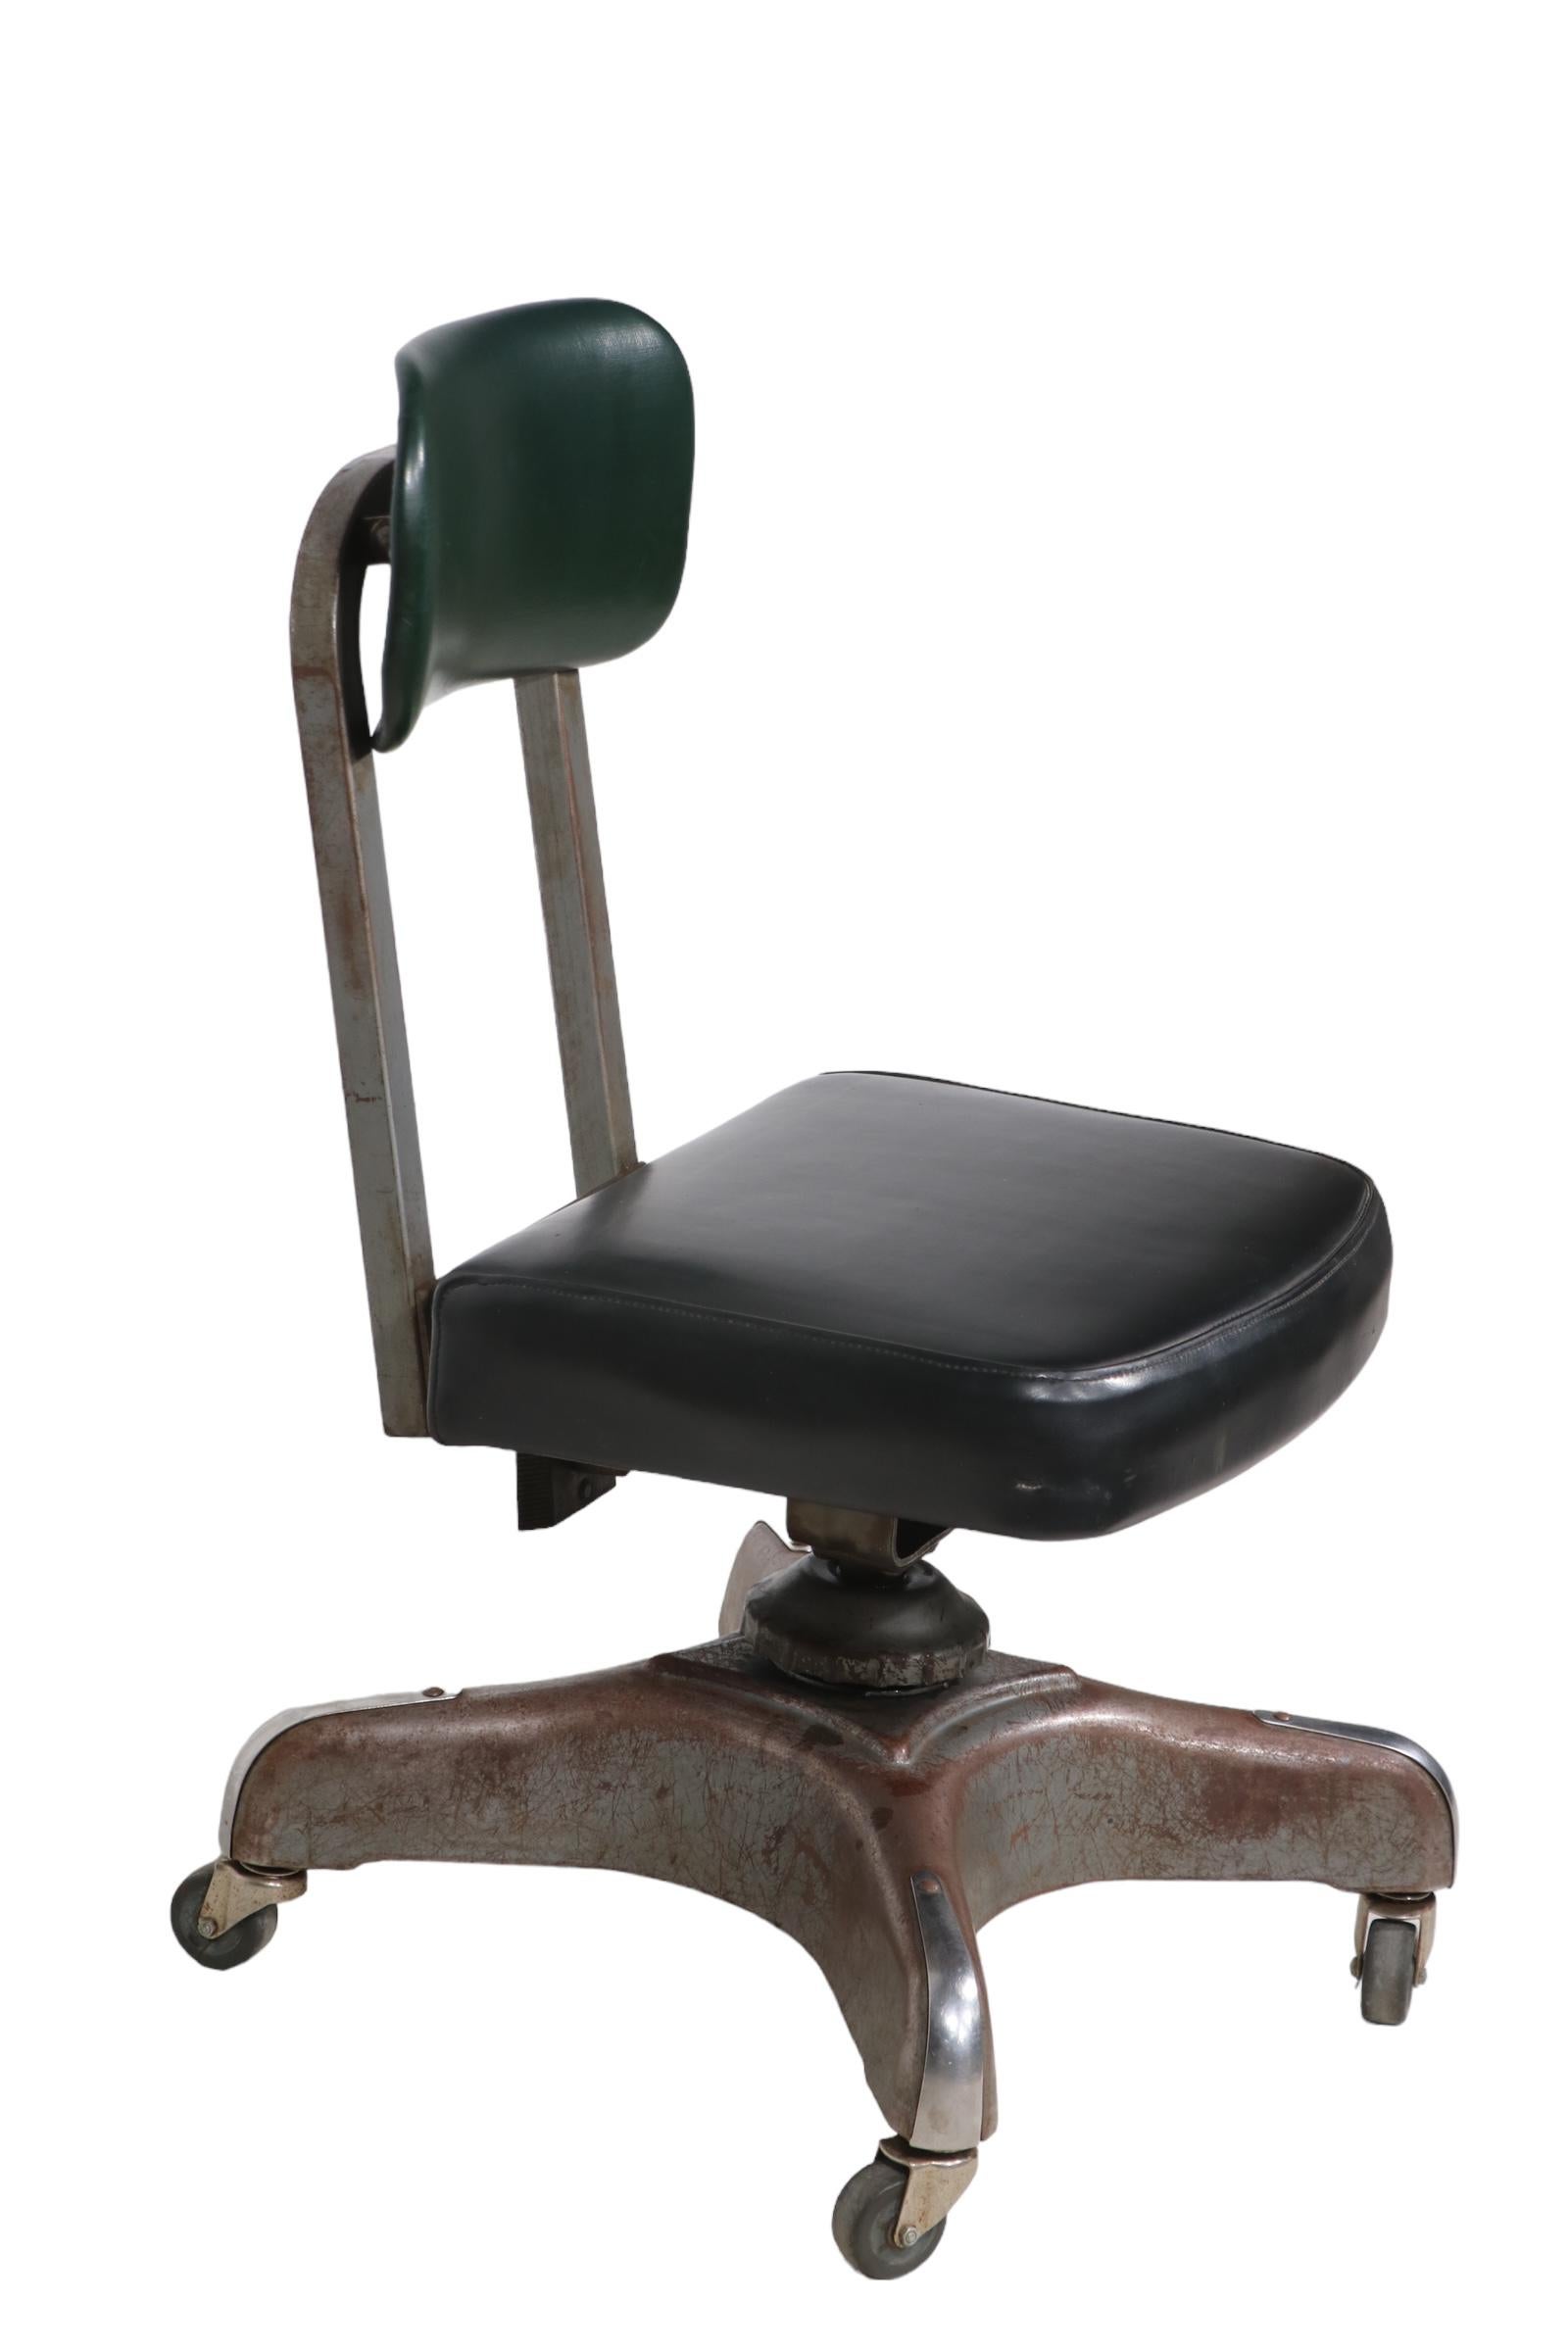 Art Deco Industrial Swivel Tilt Armless Desk Chair by Harter Corporation 1930/40 For Sale 3